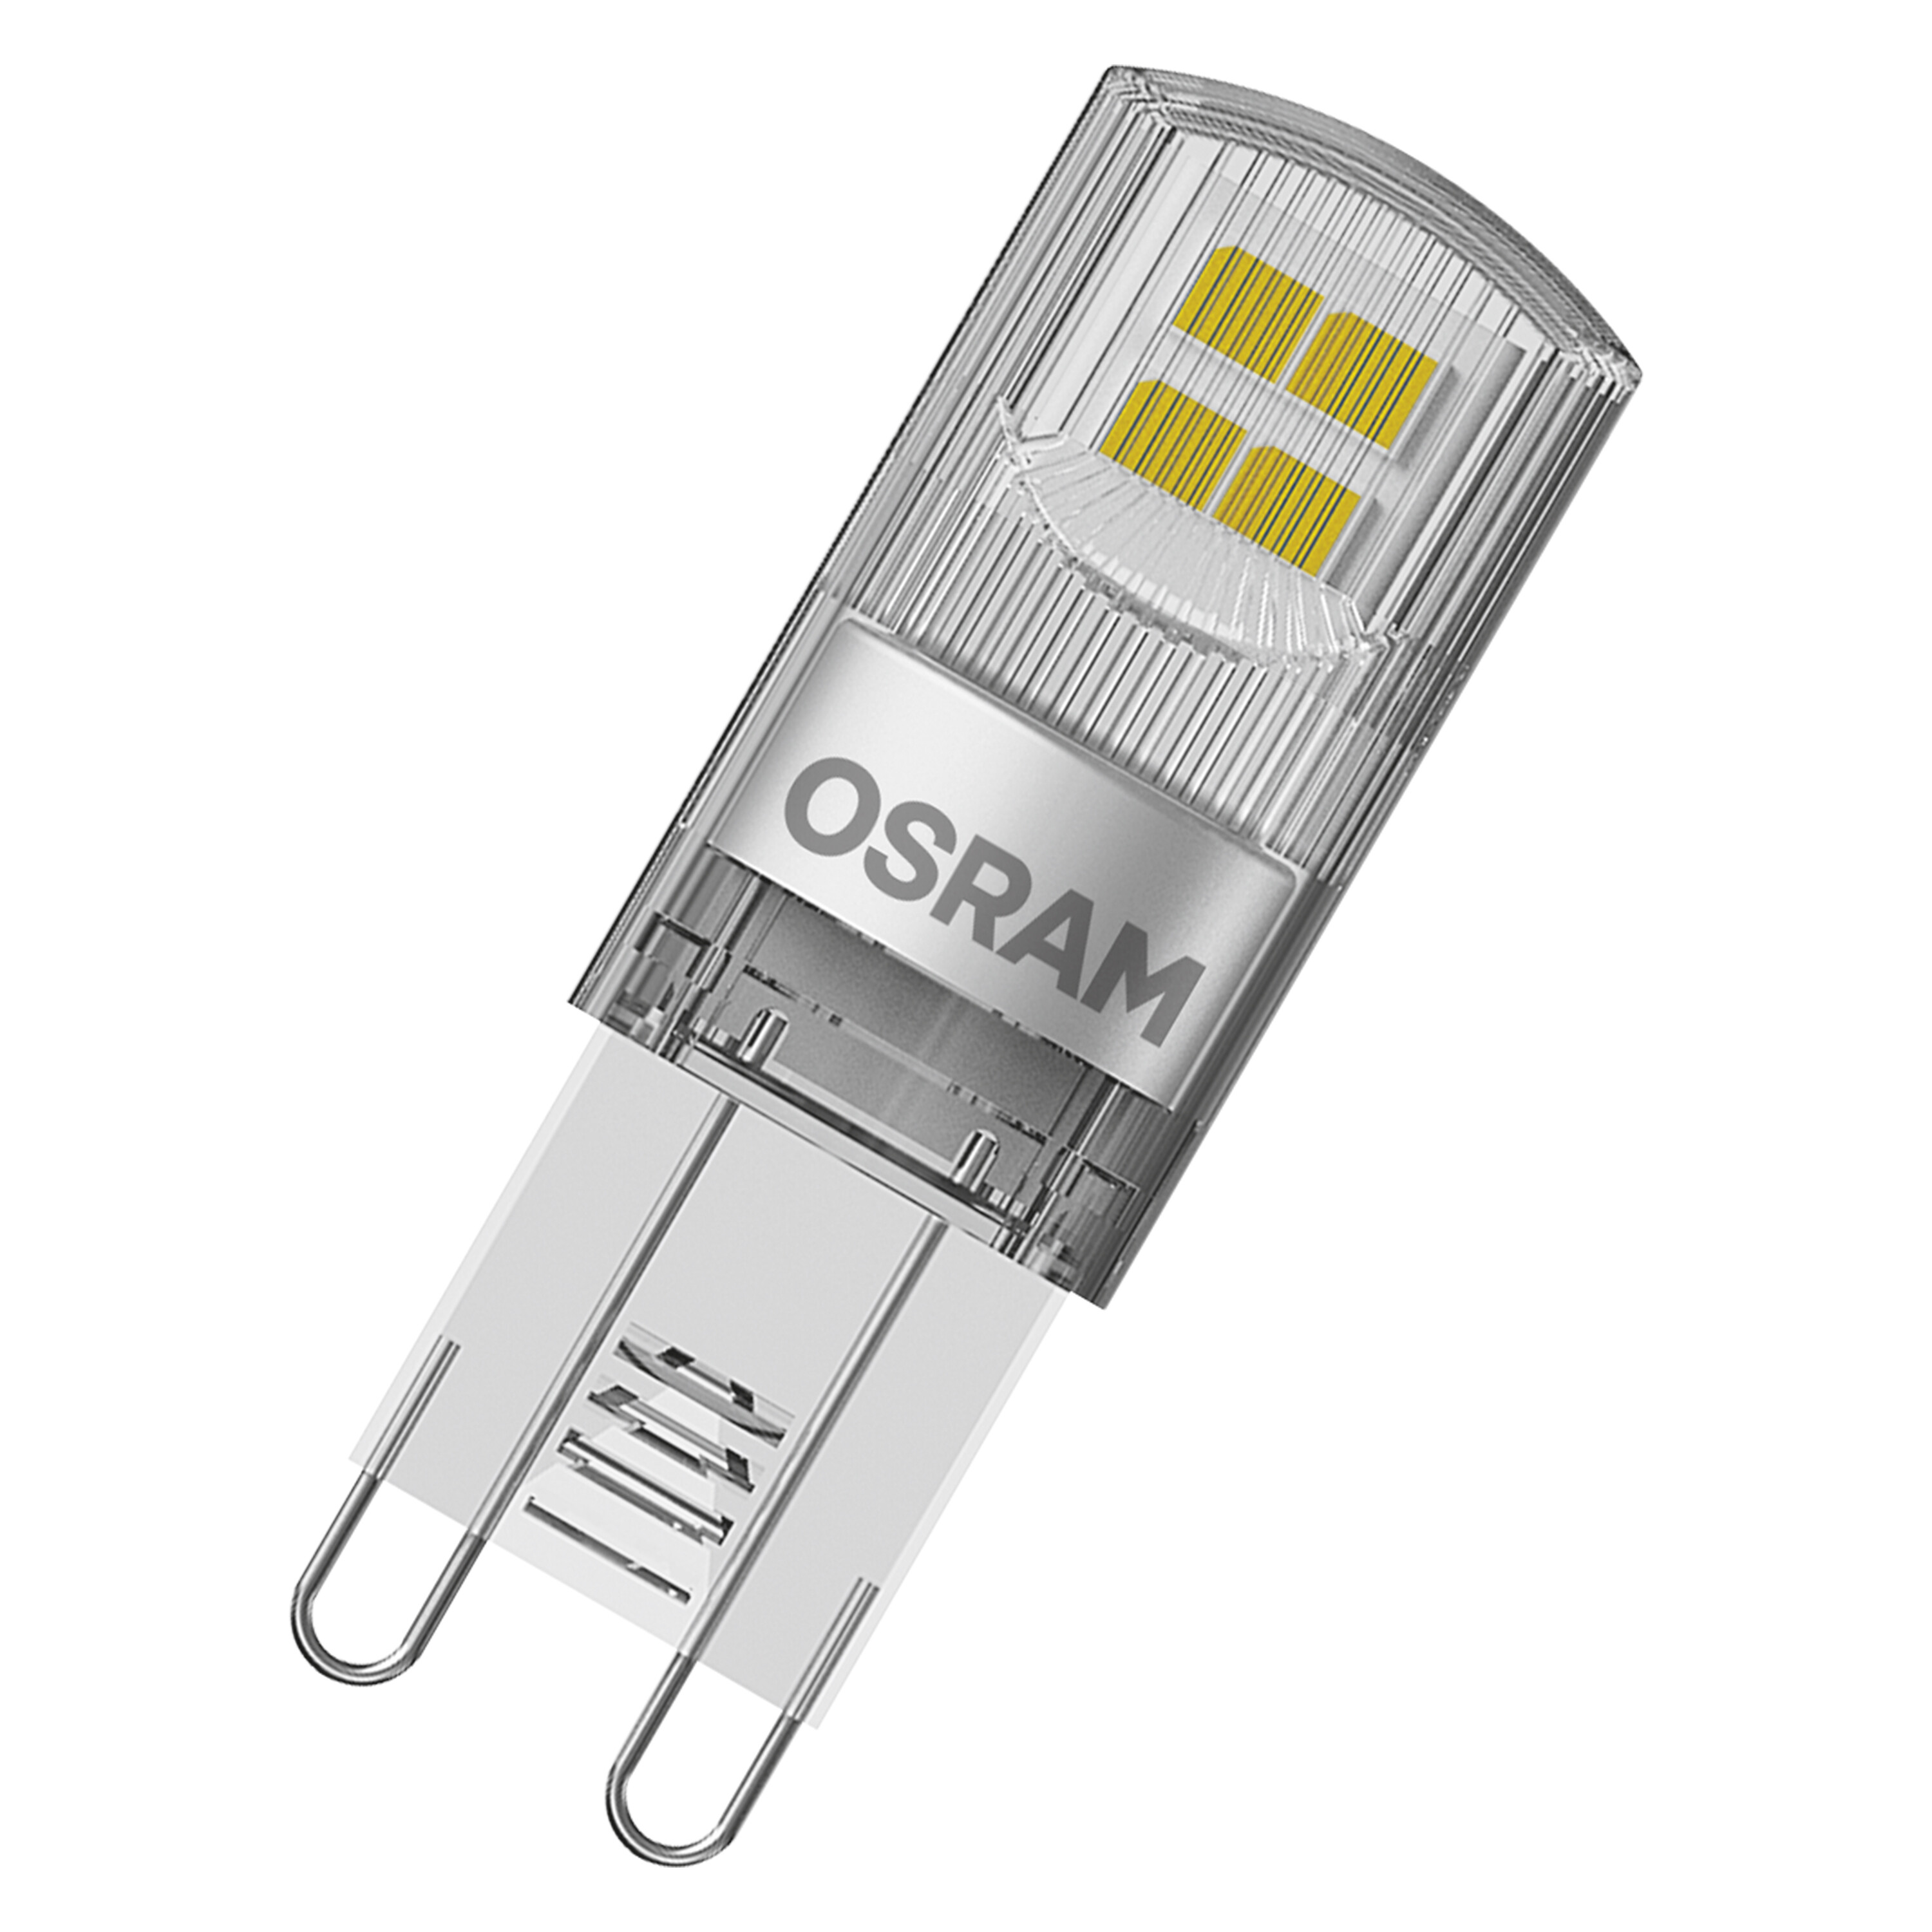 OSRAM  LED BASE Lumen G9 PIN Lampe 200 Warmweiß LED